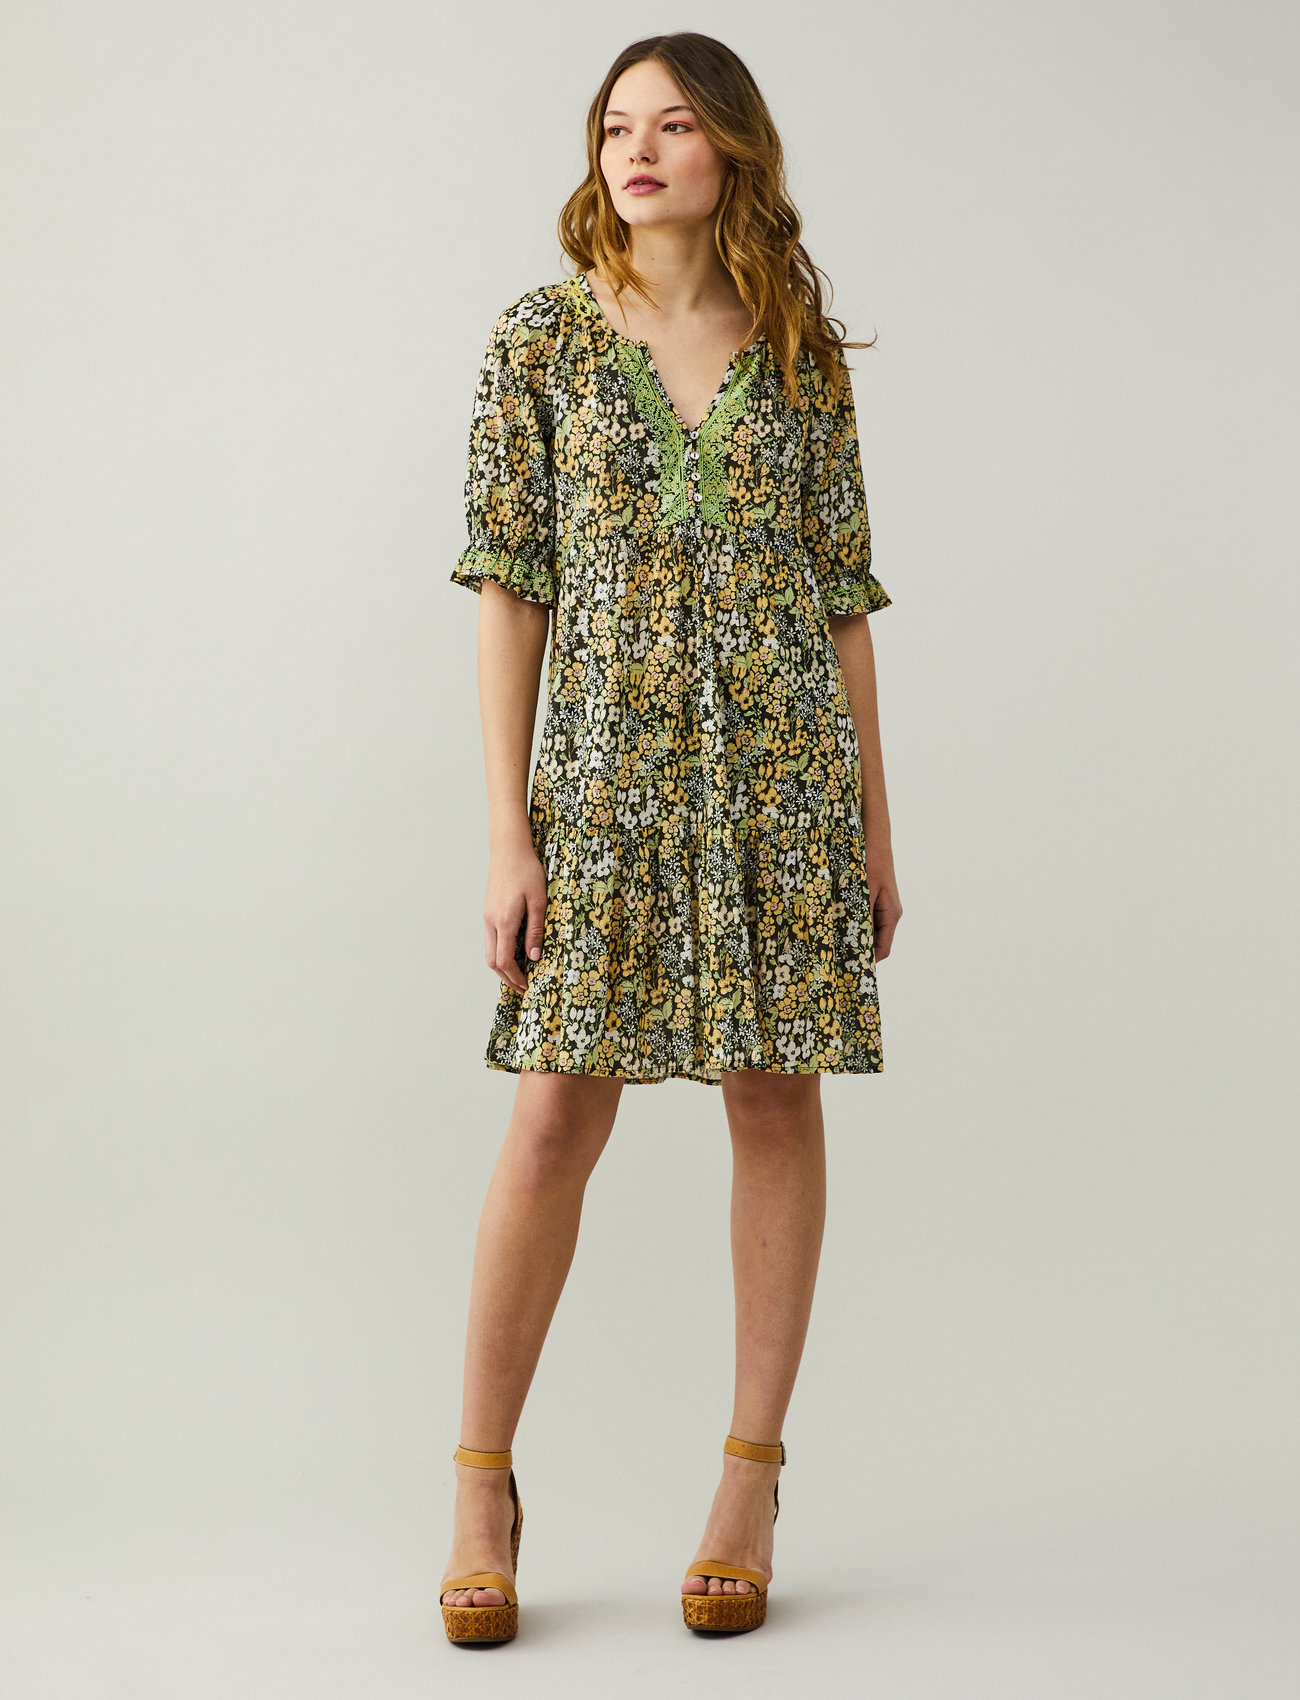 ODD MOLLY - Phoenix Short Dress - summer dresses - deep asphalt - 0